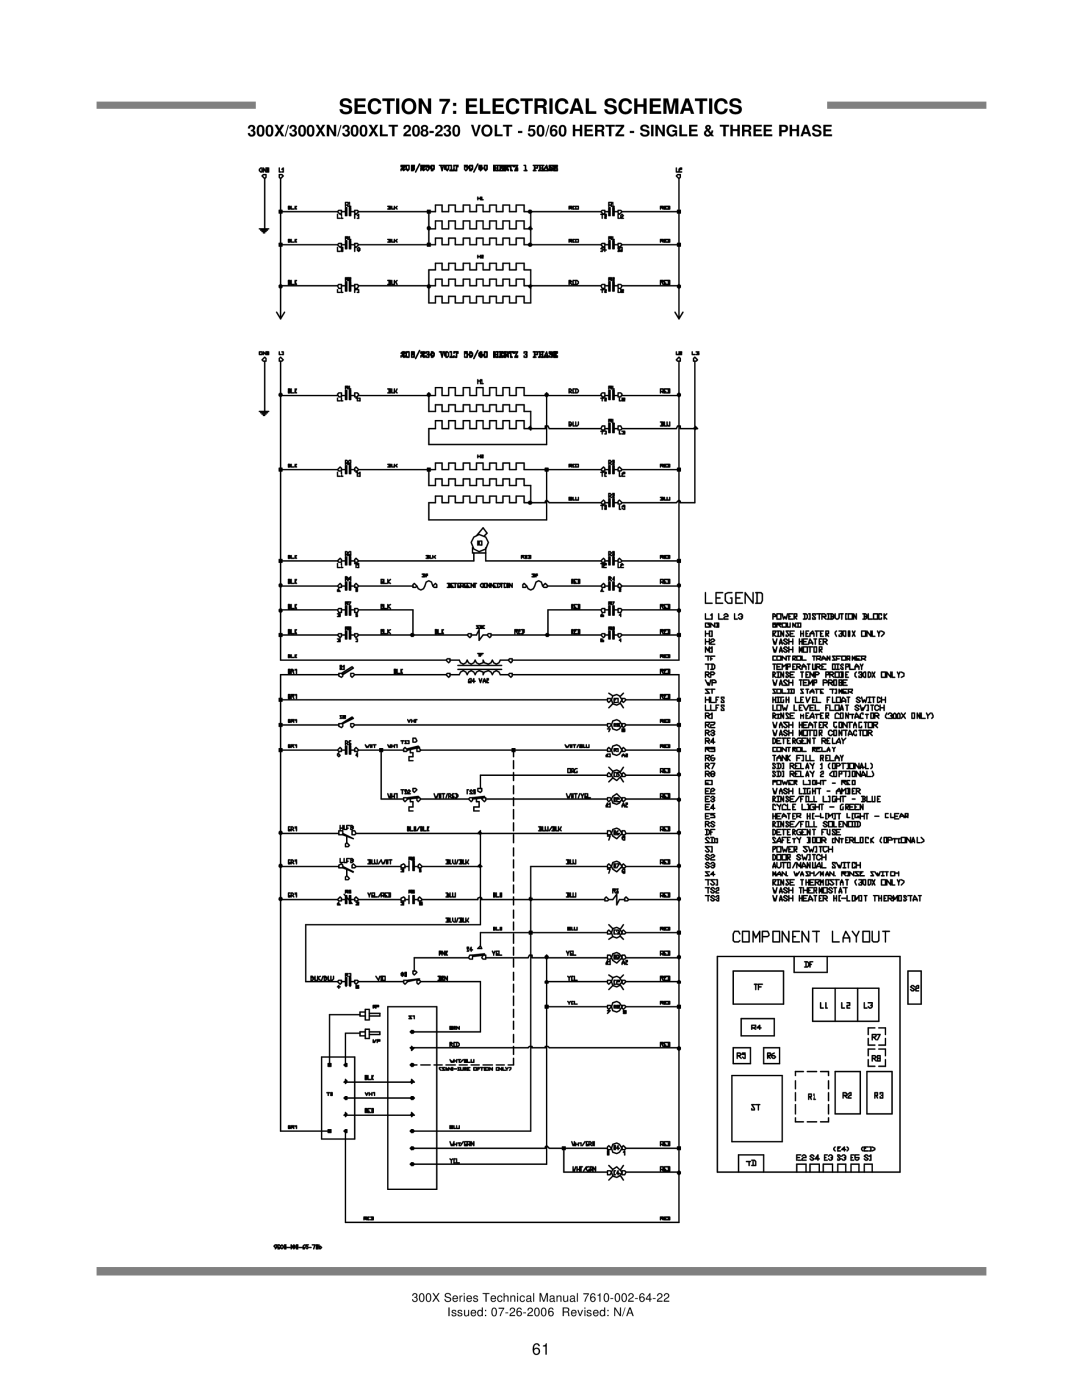 Jackson Electrical Schematics, 300X/300XN/300XLT 208-230 VOLT - 50/60 HERTZ - SINGLE & THREE PHASE, Issued, Revised N/A 